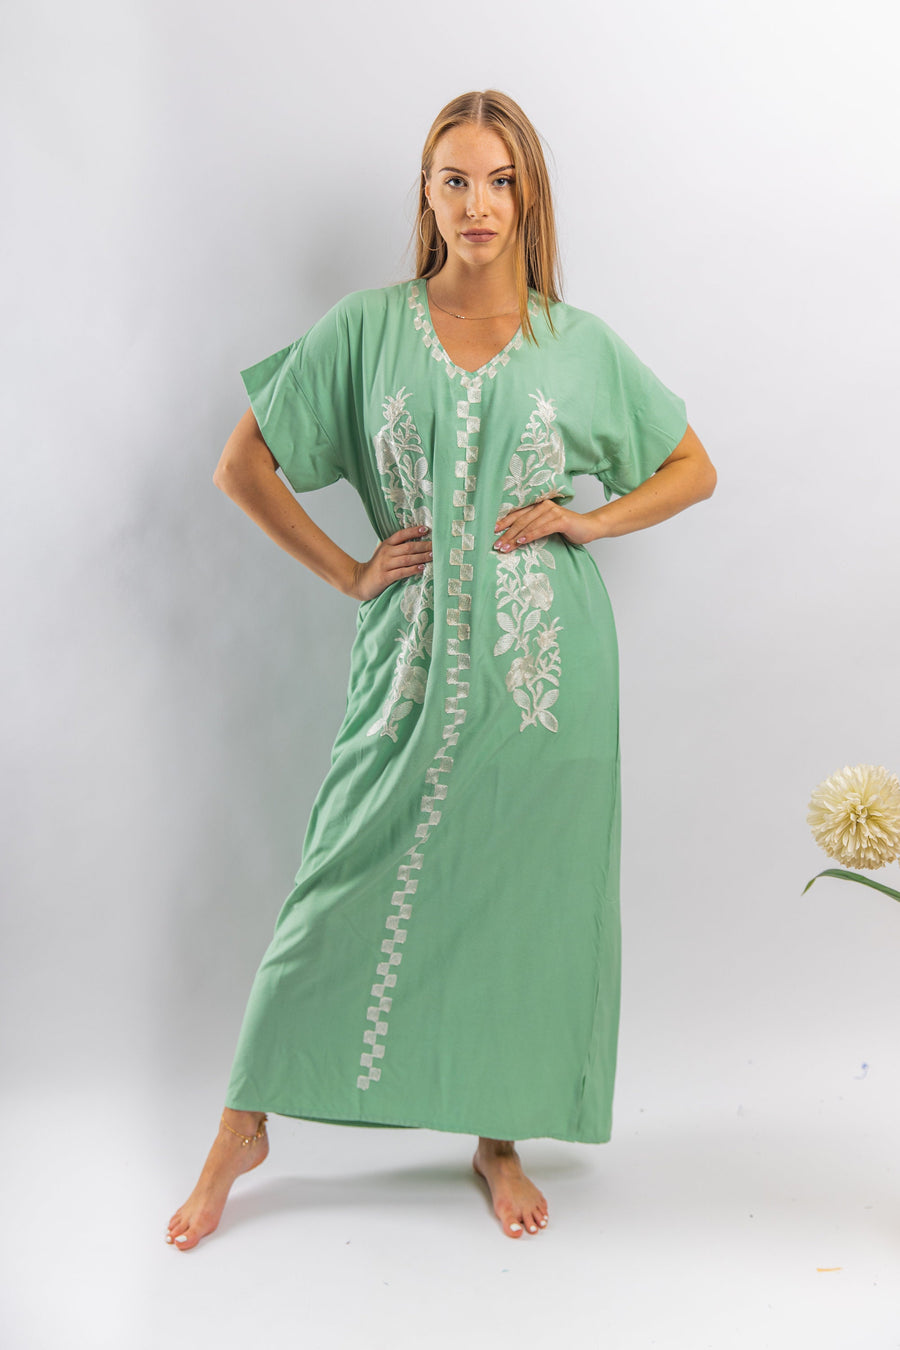 Elegant mint summer caftan, house dress, bohemian caftans for women, cute short sleeve kaftan, comfortable cotton Kaftan, Egyptian cotton